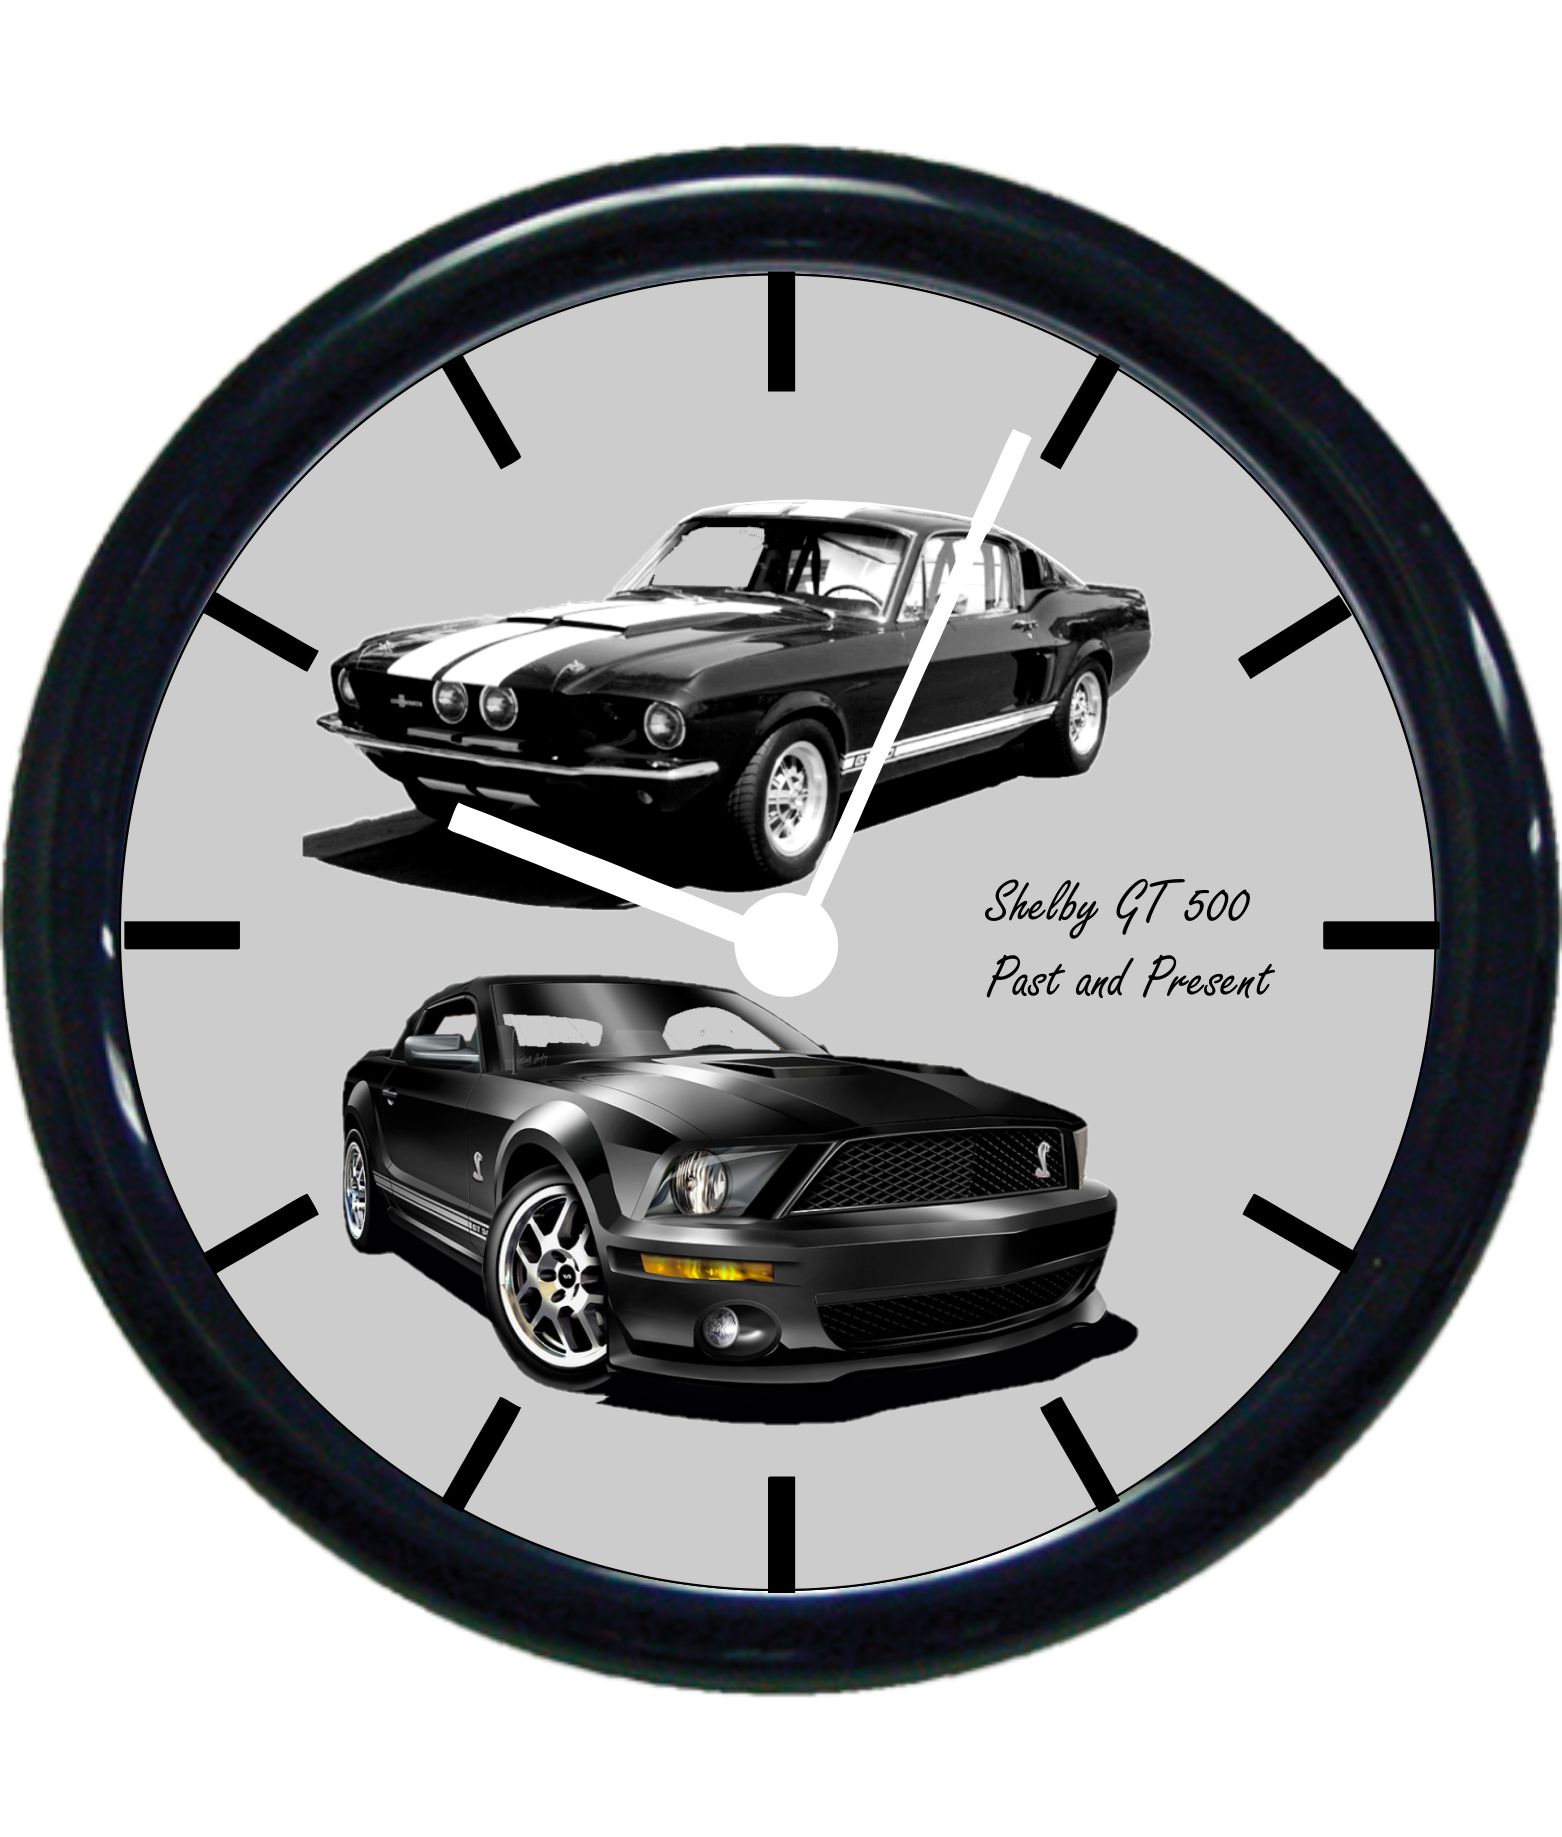 GT 500 wall clock